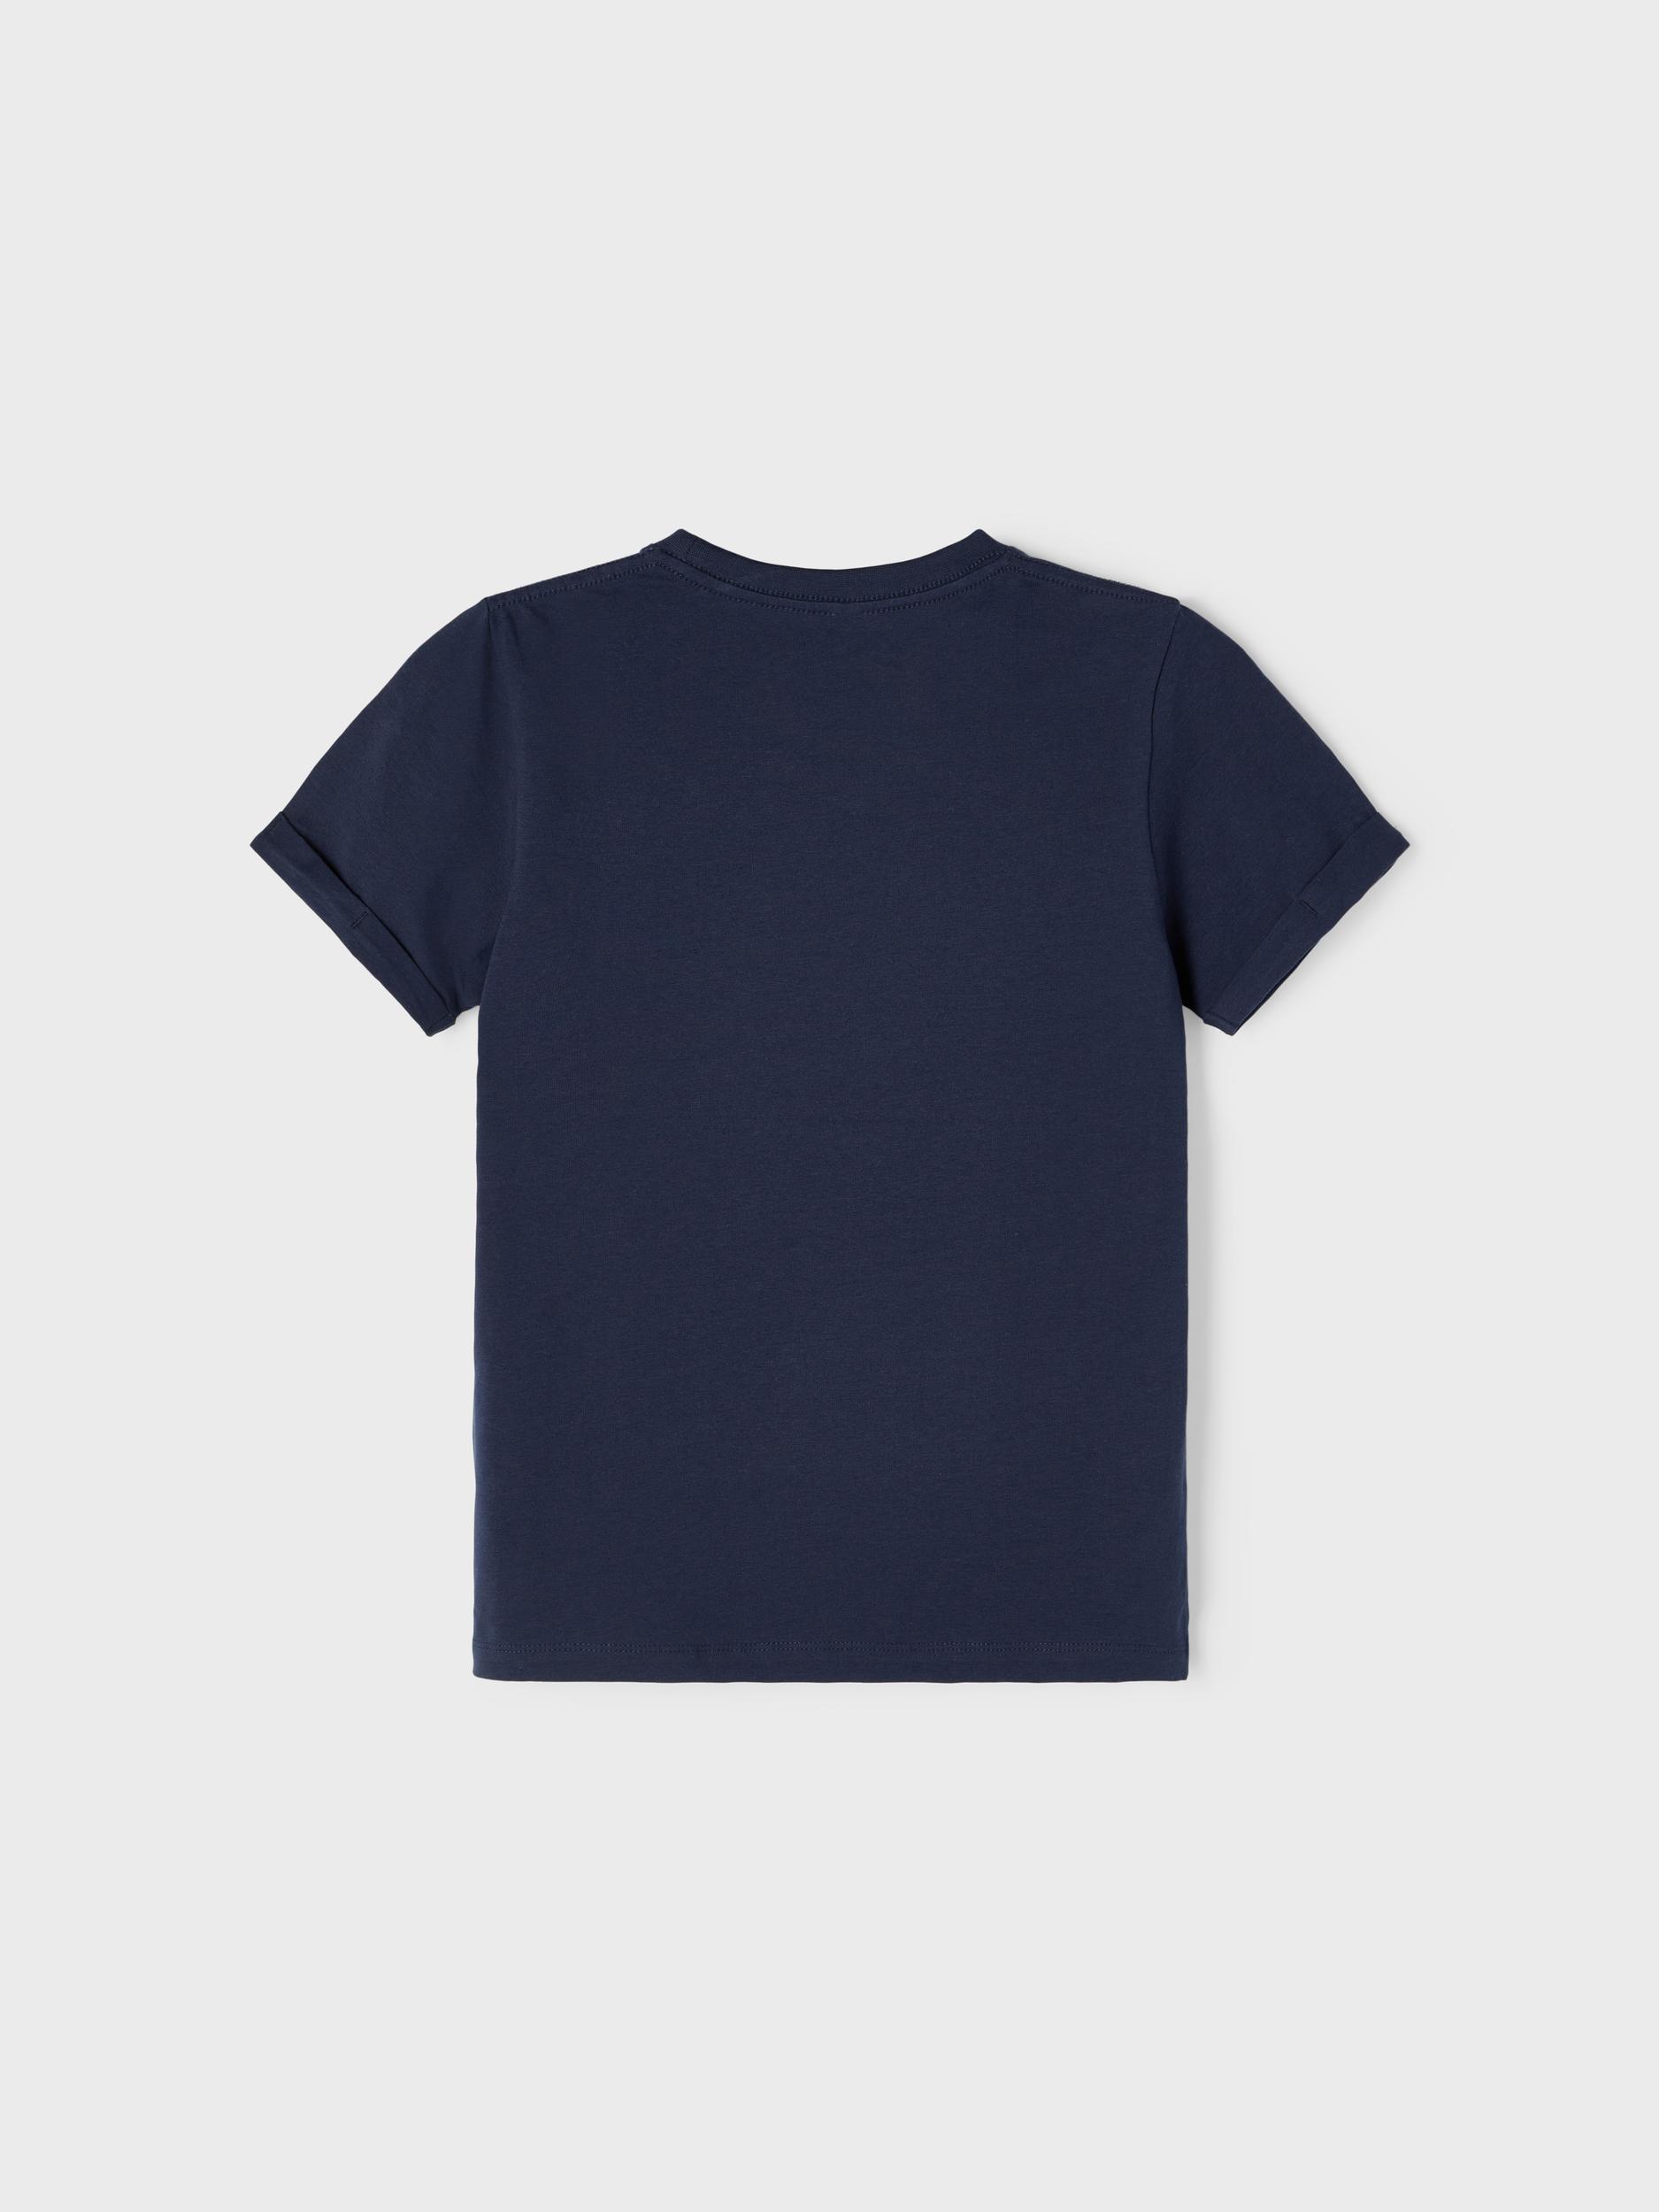  T-Shirt, Dark Sapphire, 134-140 cm